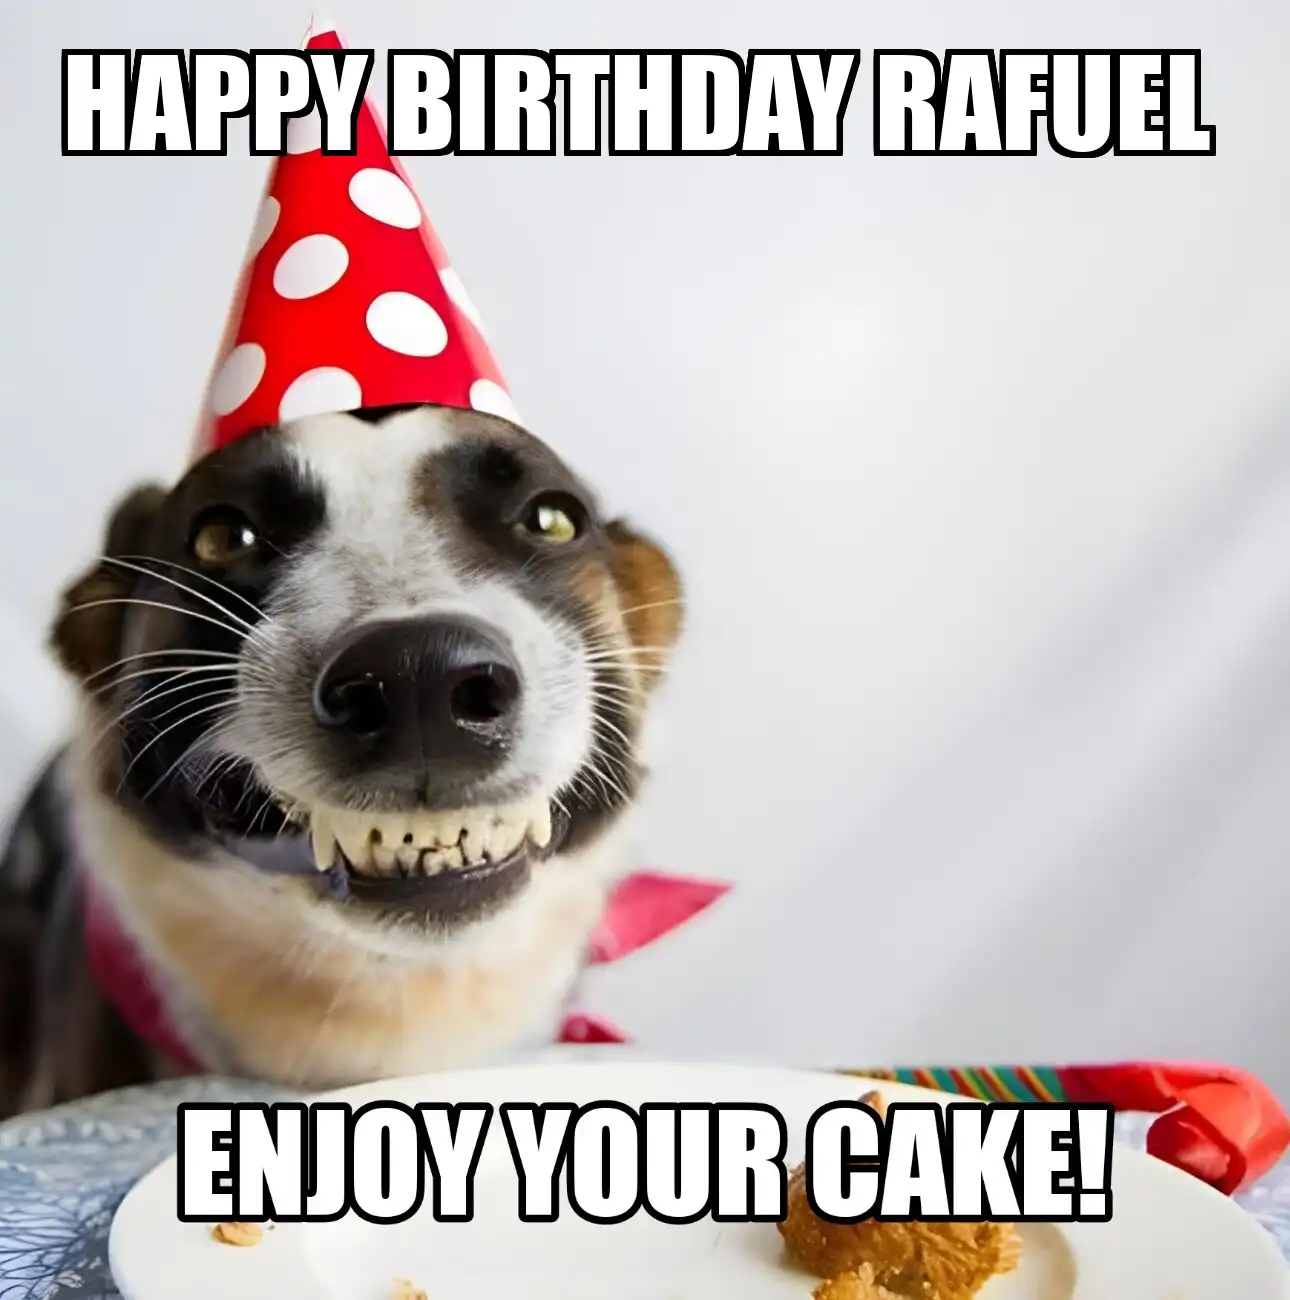 Happy Birthday Rafuel Enjoy Your Cake Dog Meme